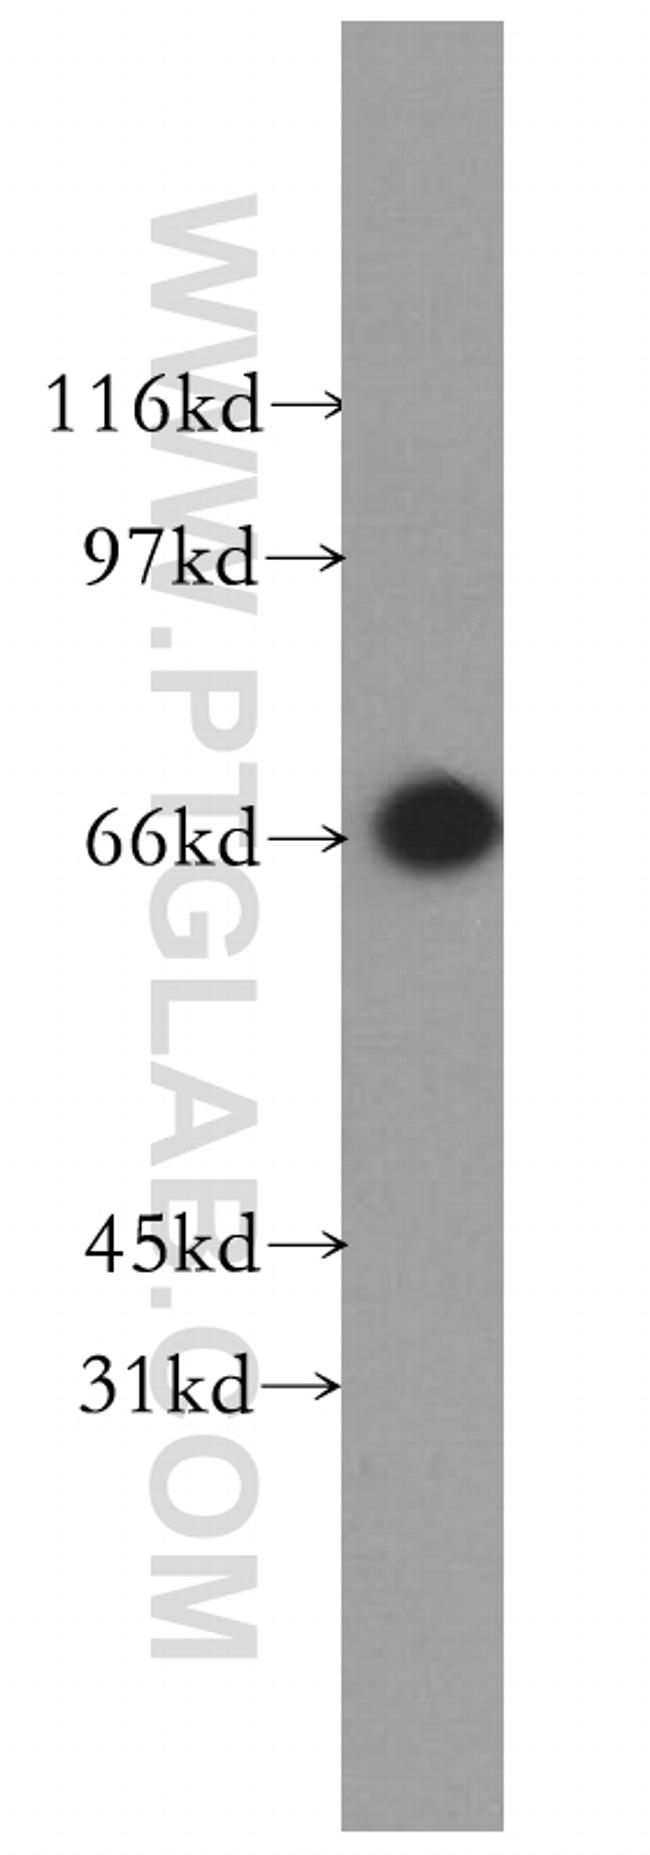 SYVN1 Antibody in Western Blot (WB)